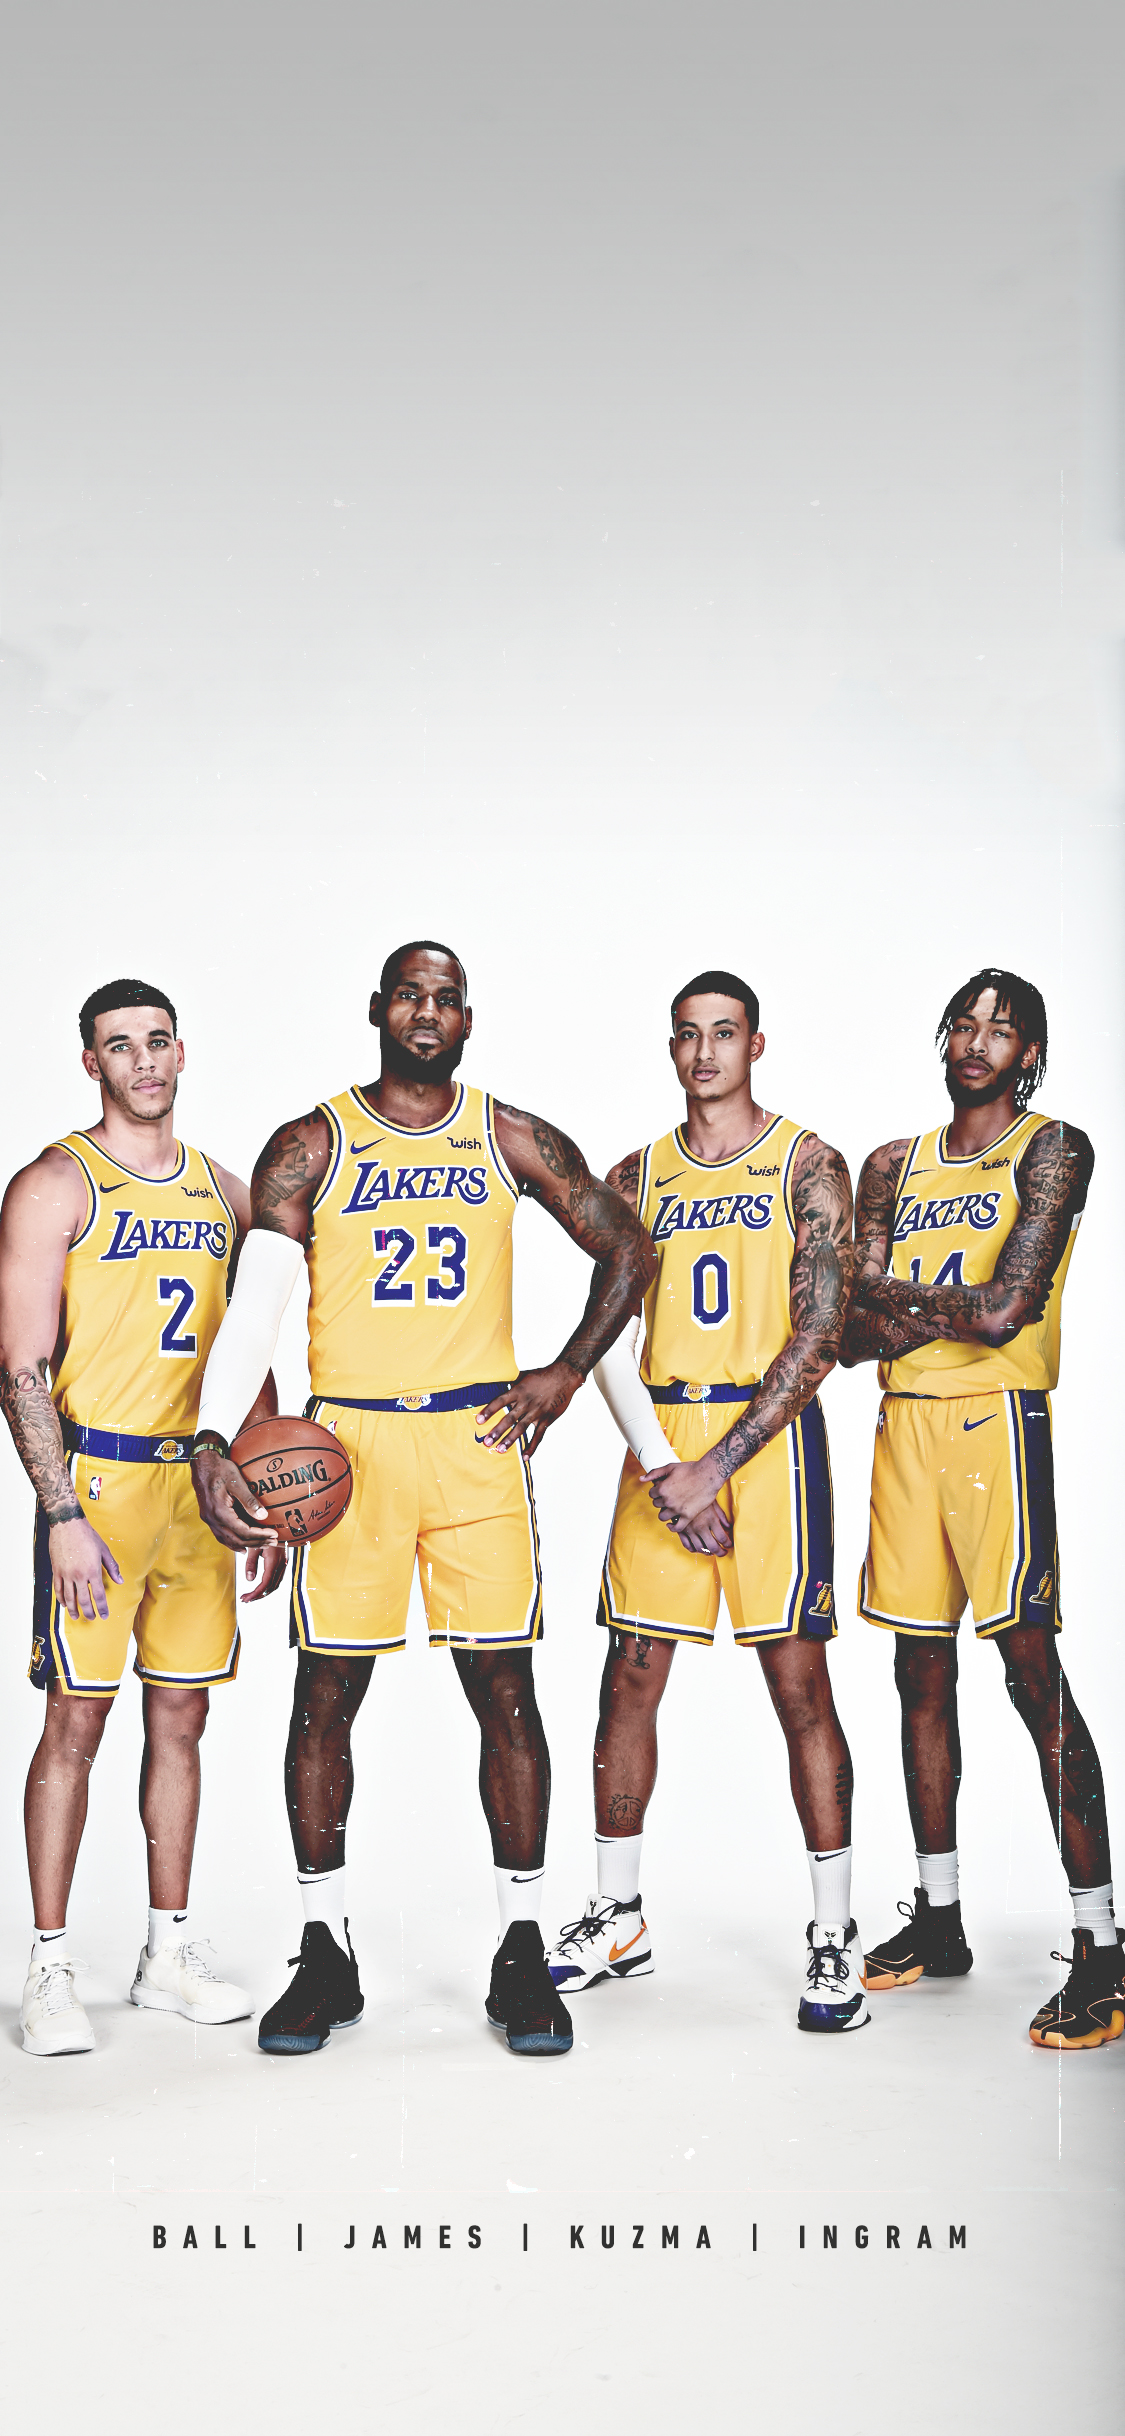 Rajon Rondo Lakers Wallpapers